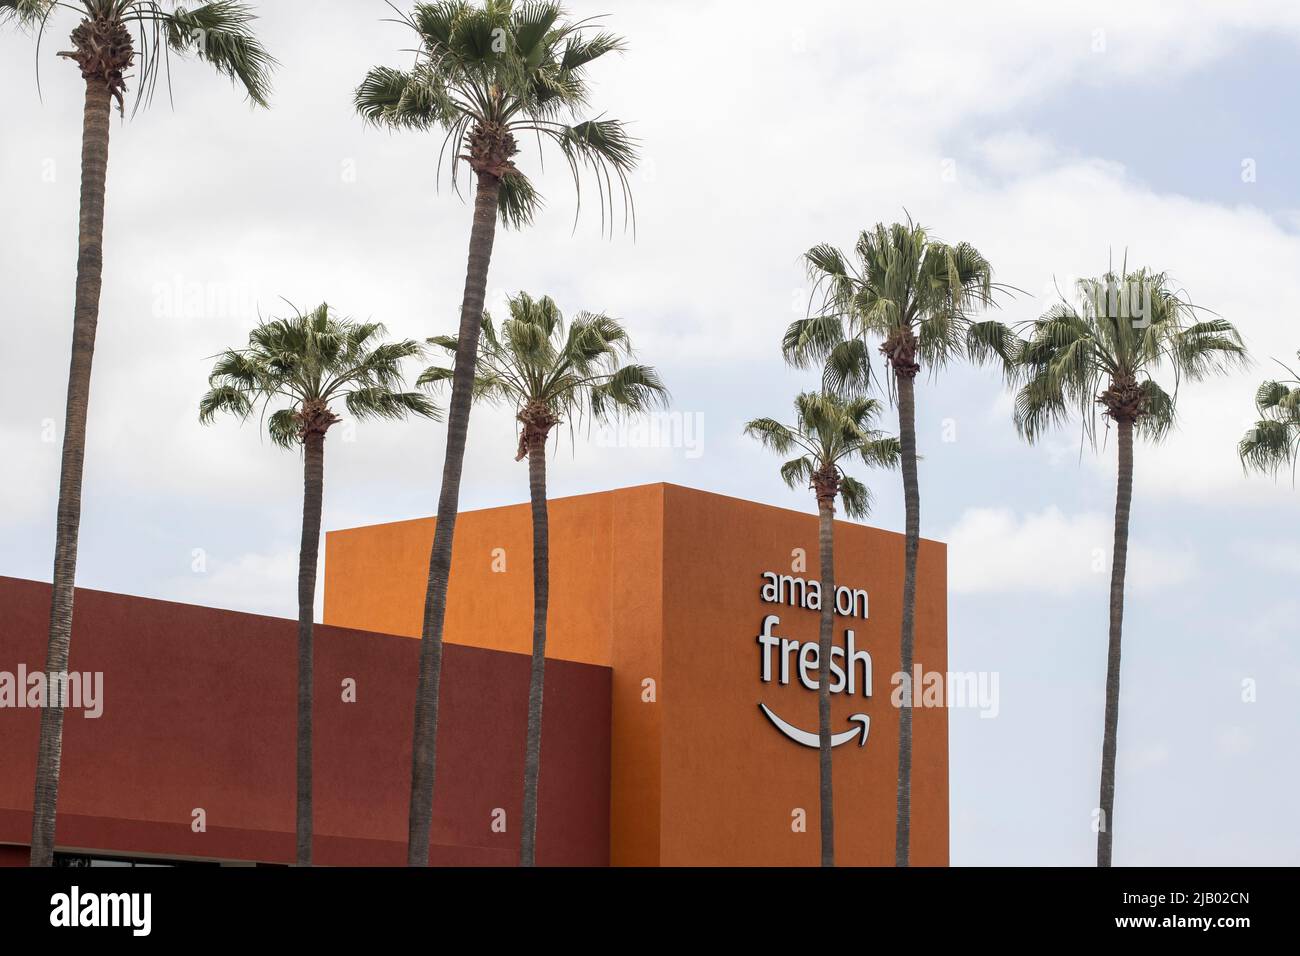 Amazon Fresh logo is seen at an Amazon Fresh grocery store in Irvine, California on Sunday, May 8, 2022. Amazon Fresh is a subsidiary of Amazon.com. Stock Photo